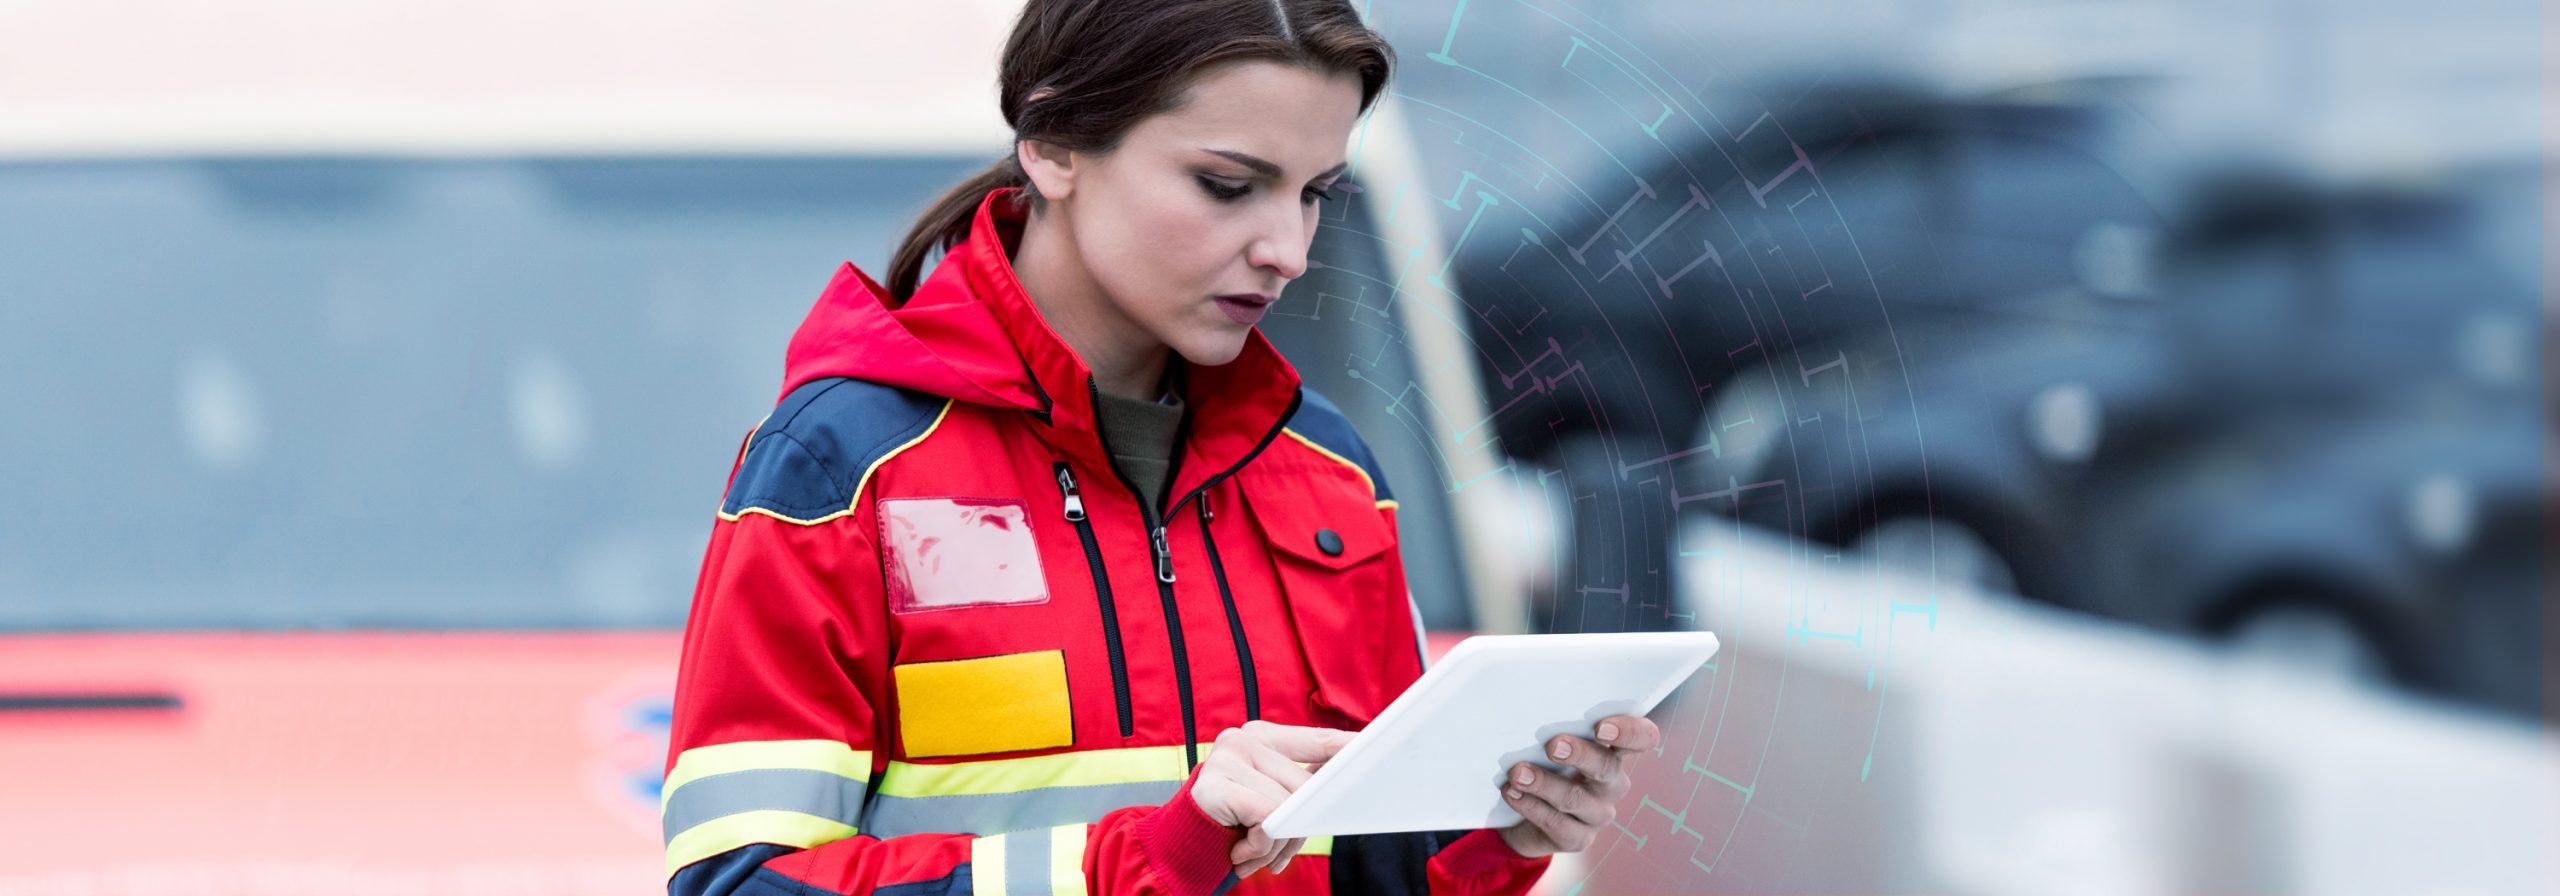 ECS Achieves AWS Public Safety & Disaster Response Competency